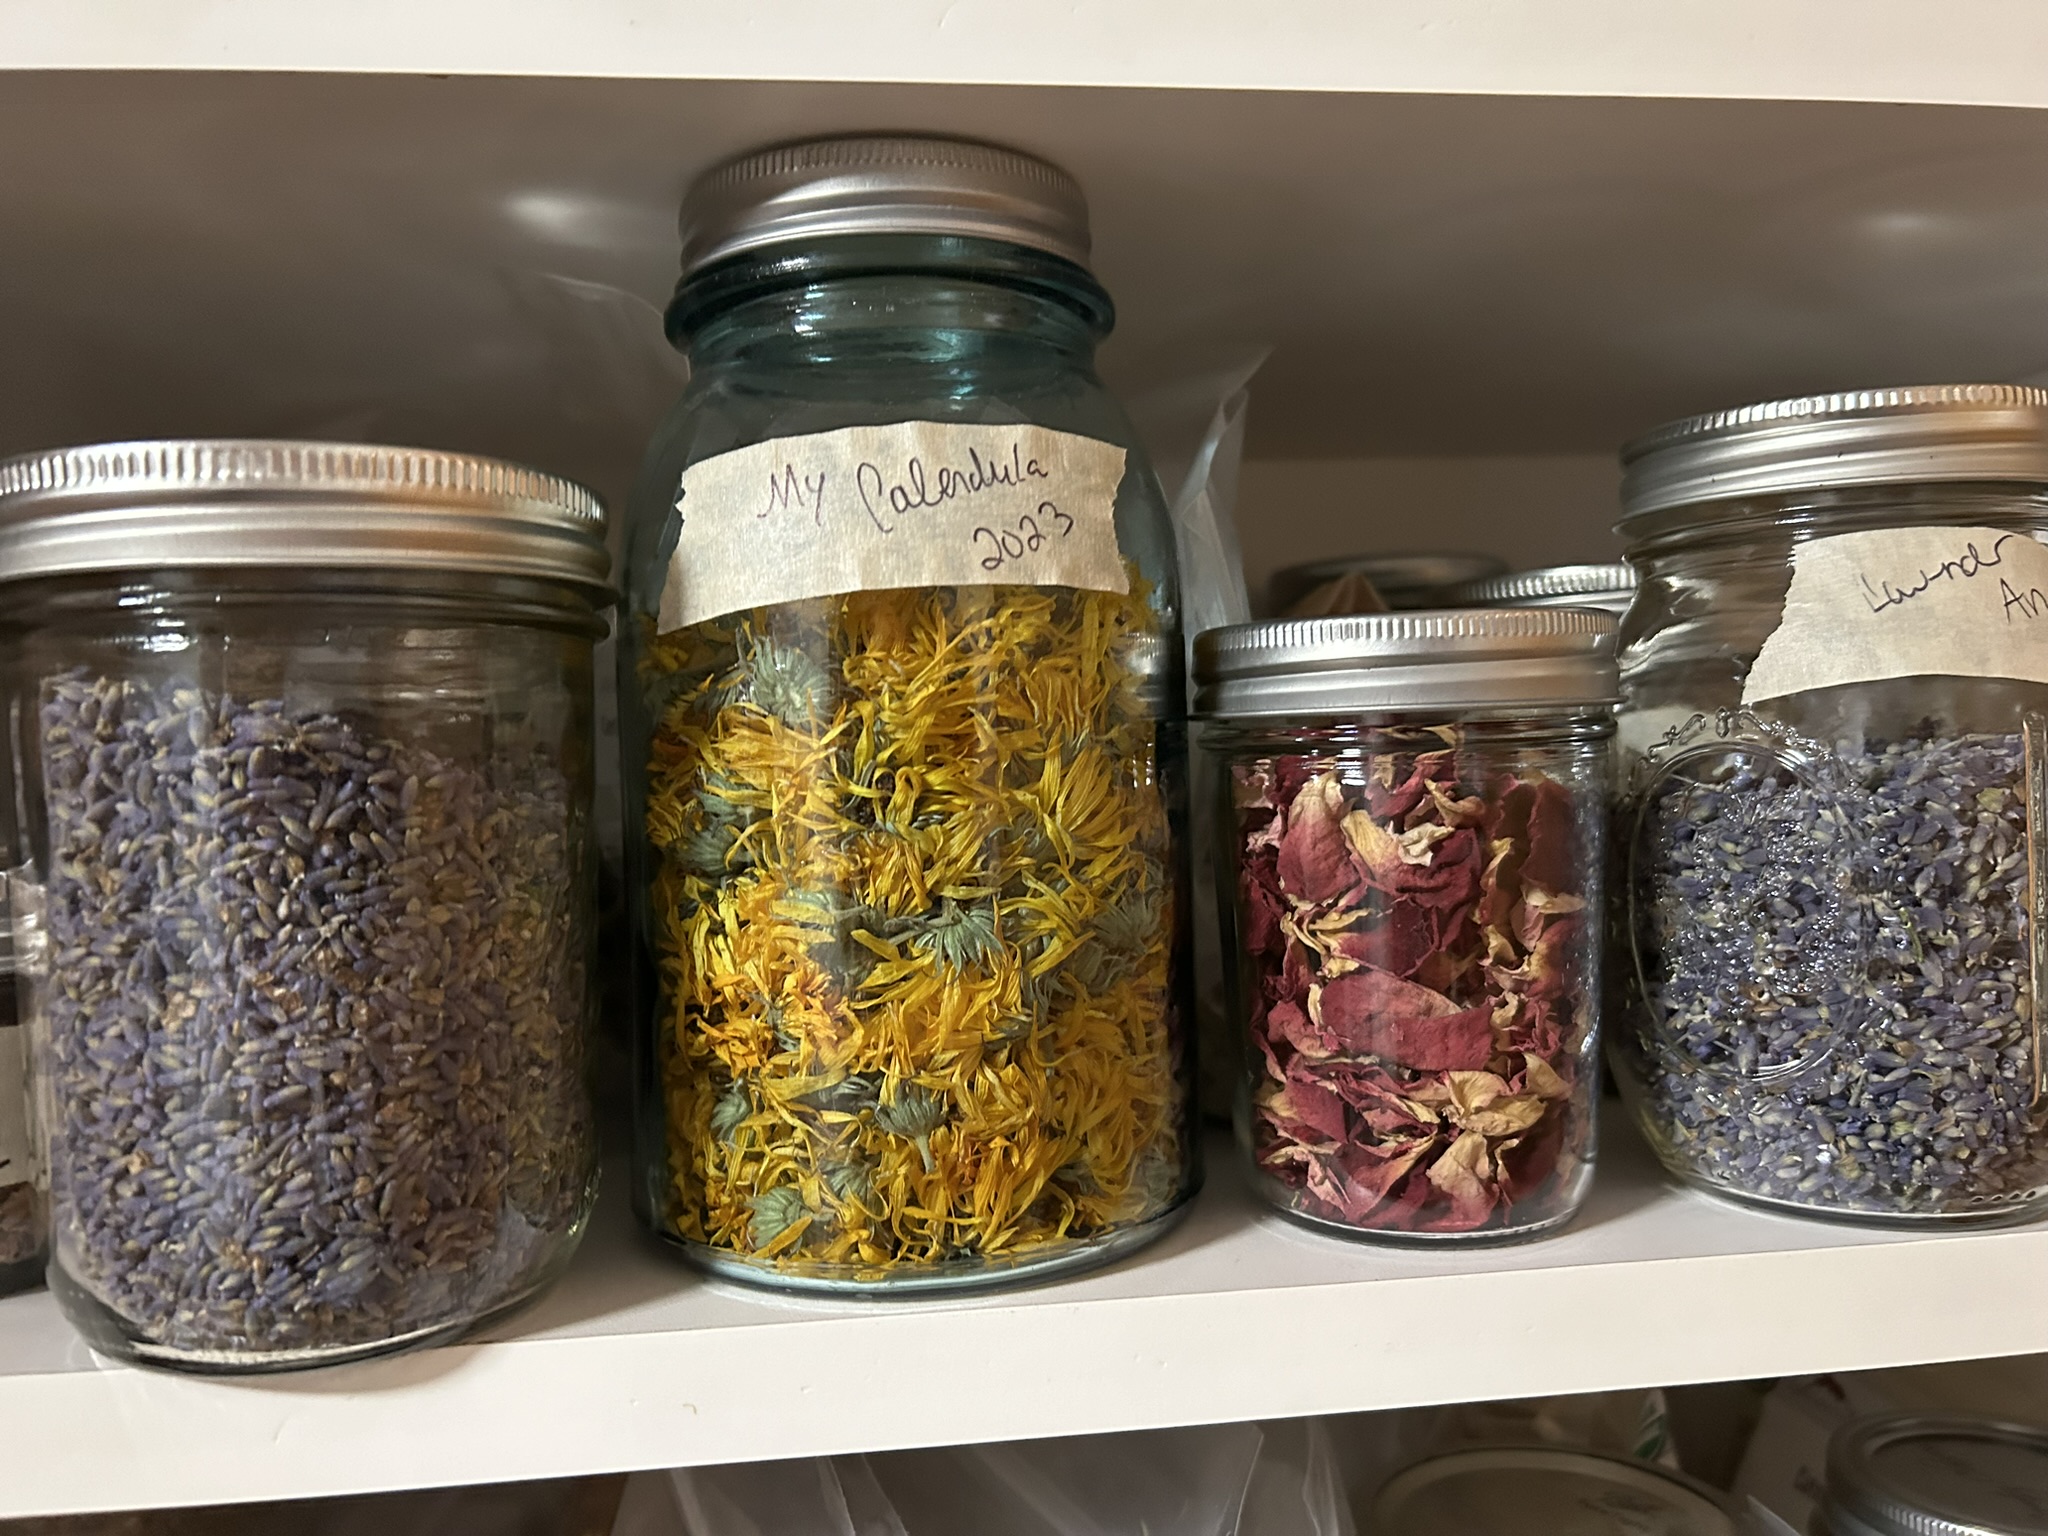 Dried herbs on a shelf